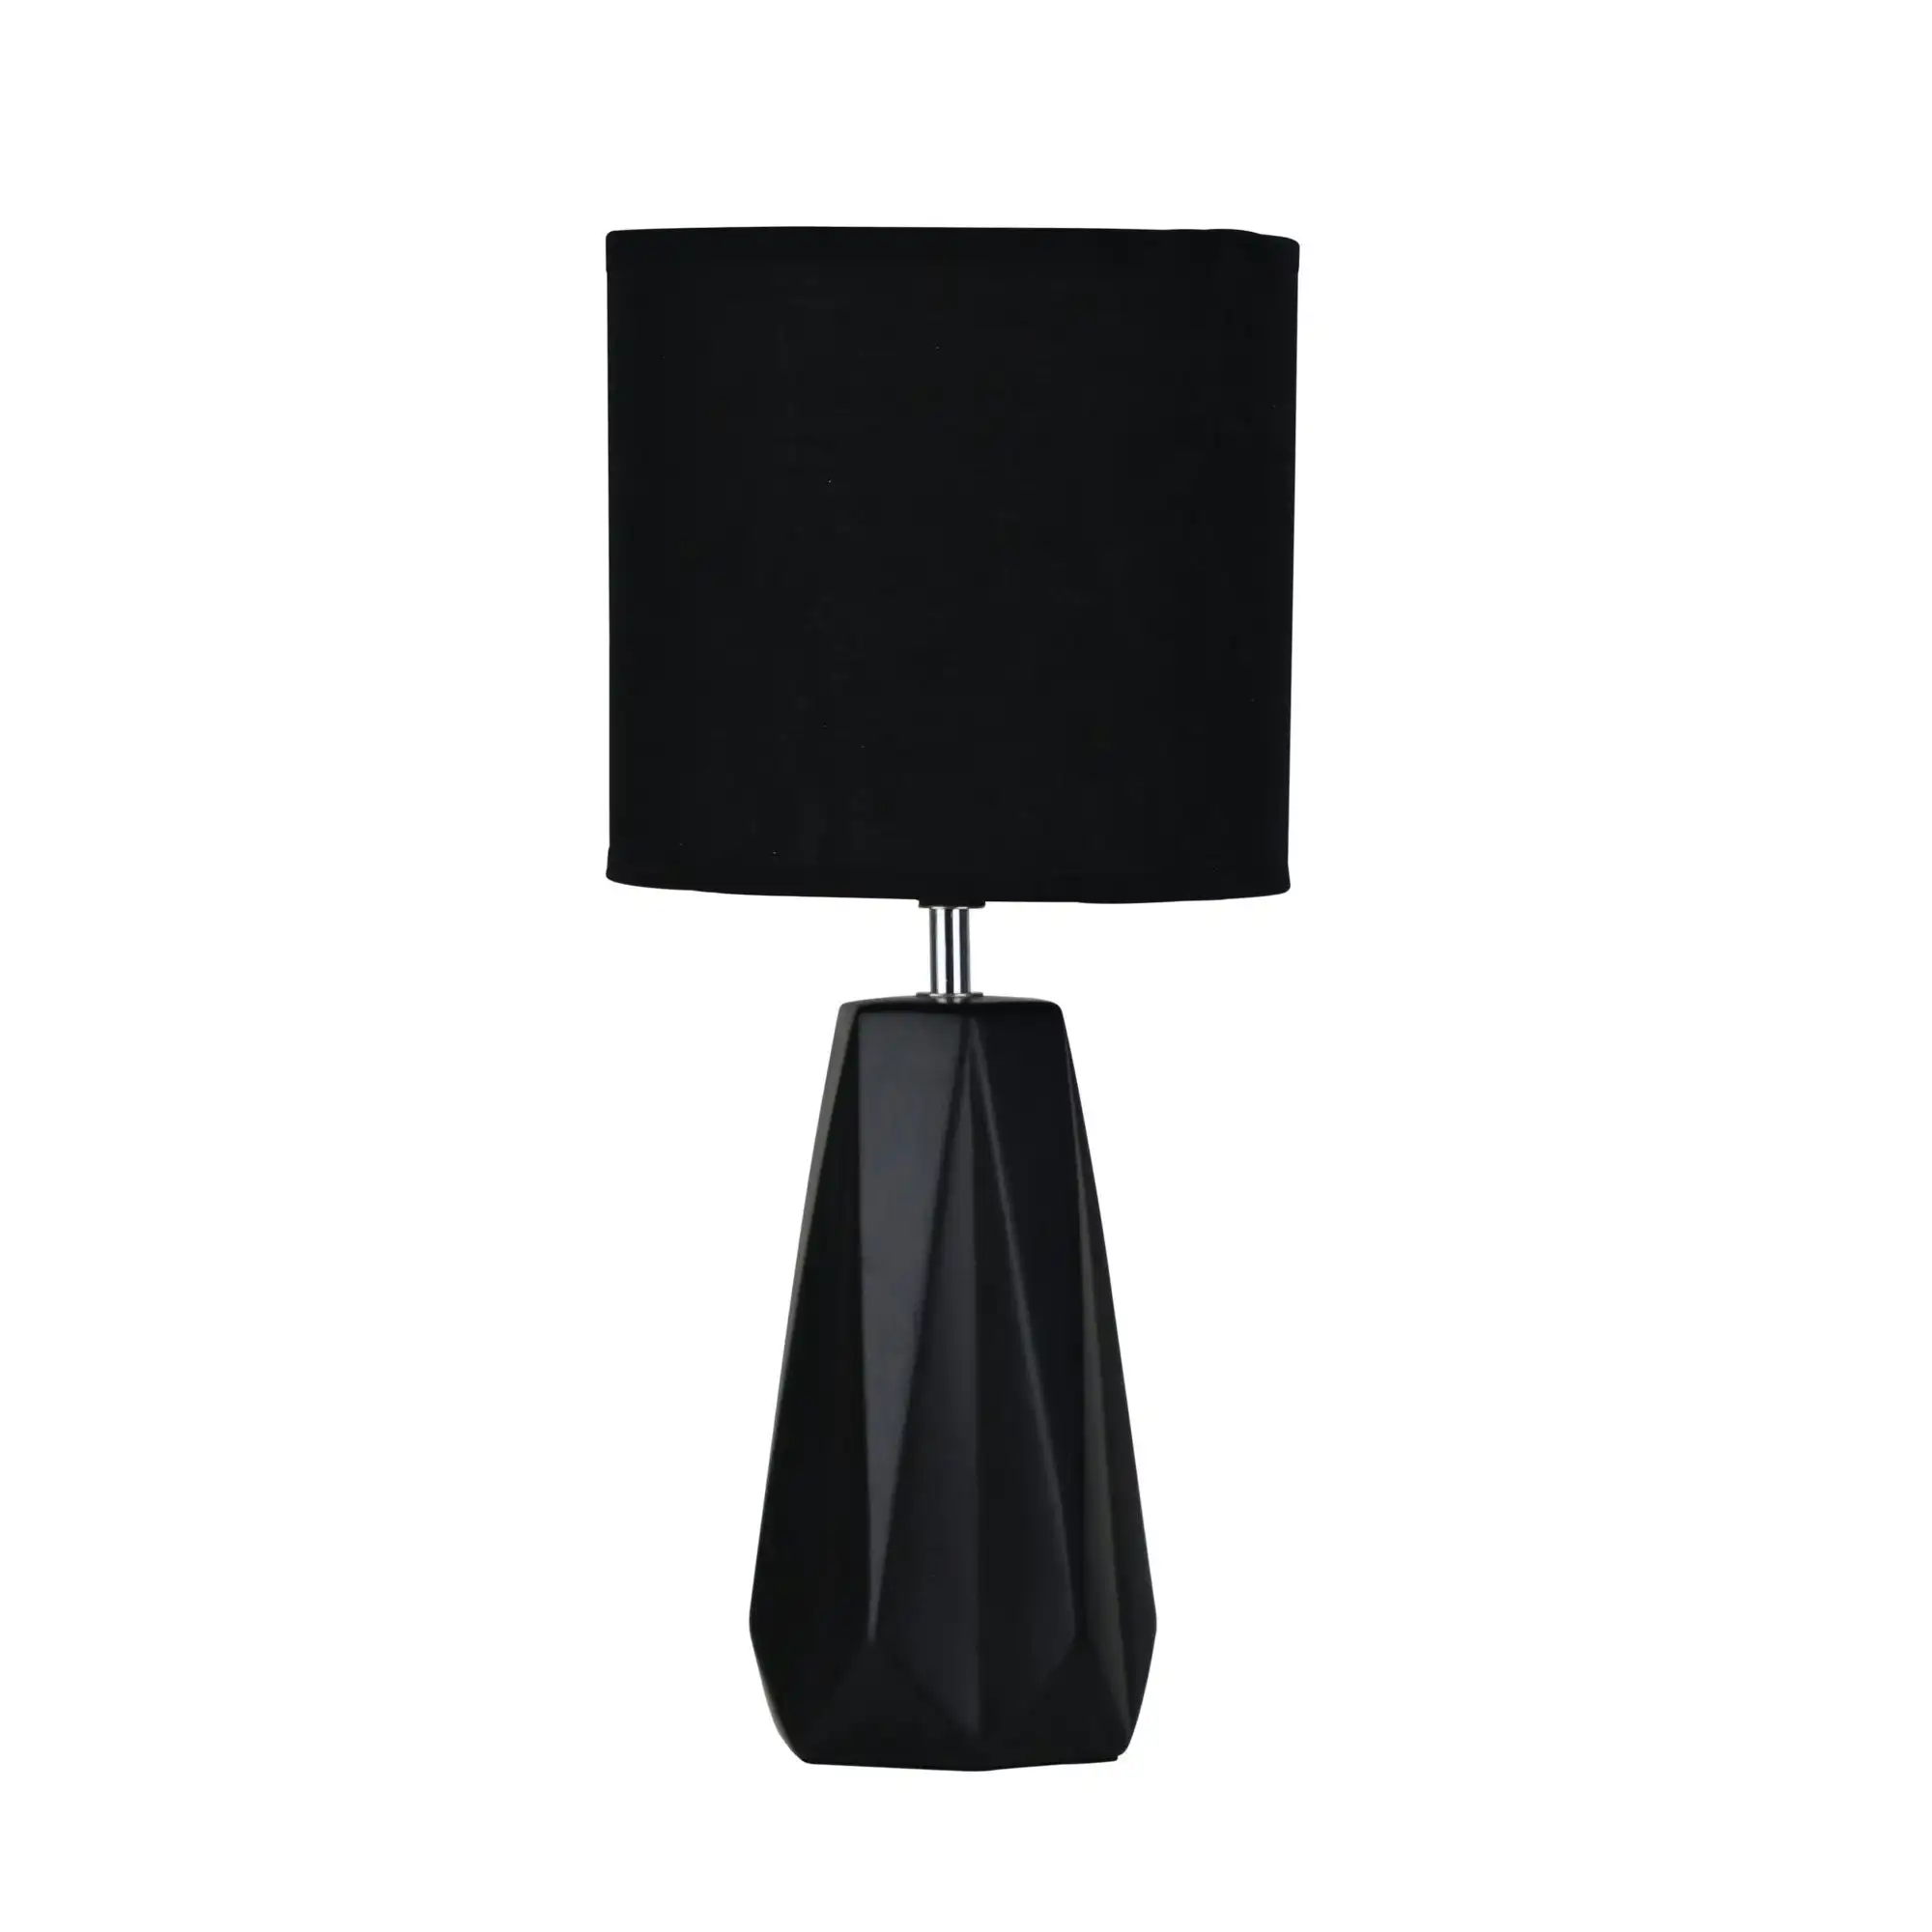 SHELLY Black Ceramic Table Lamp